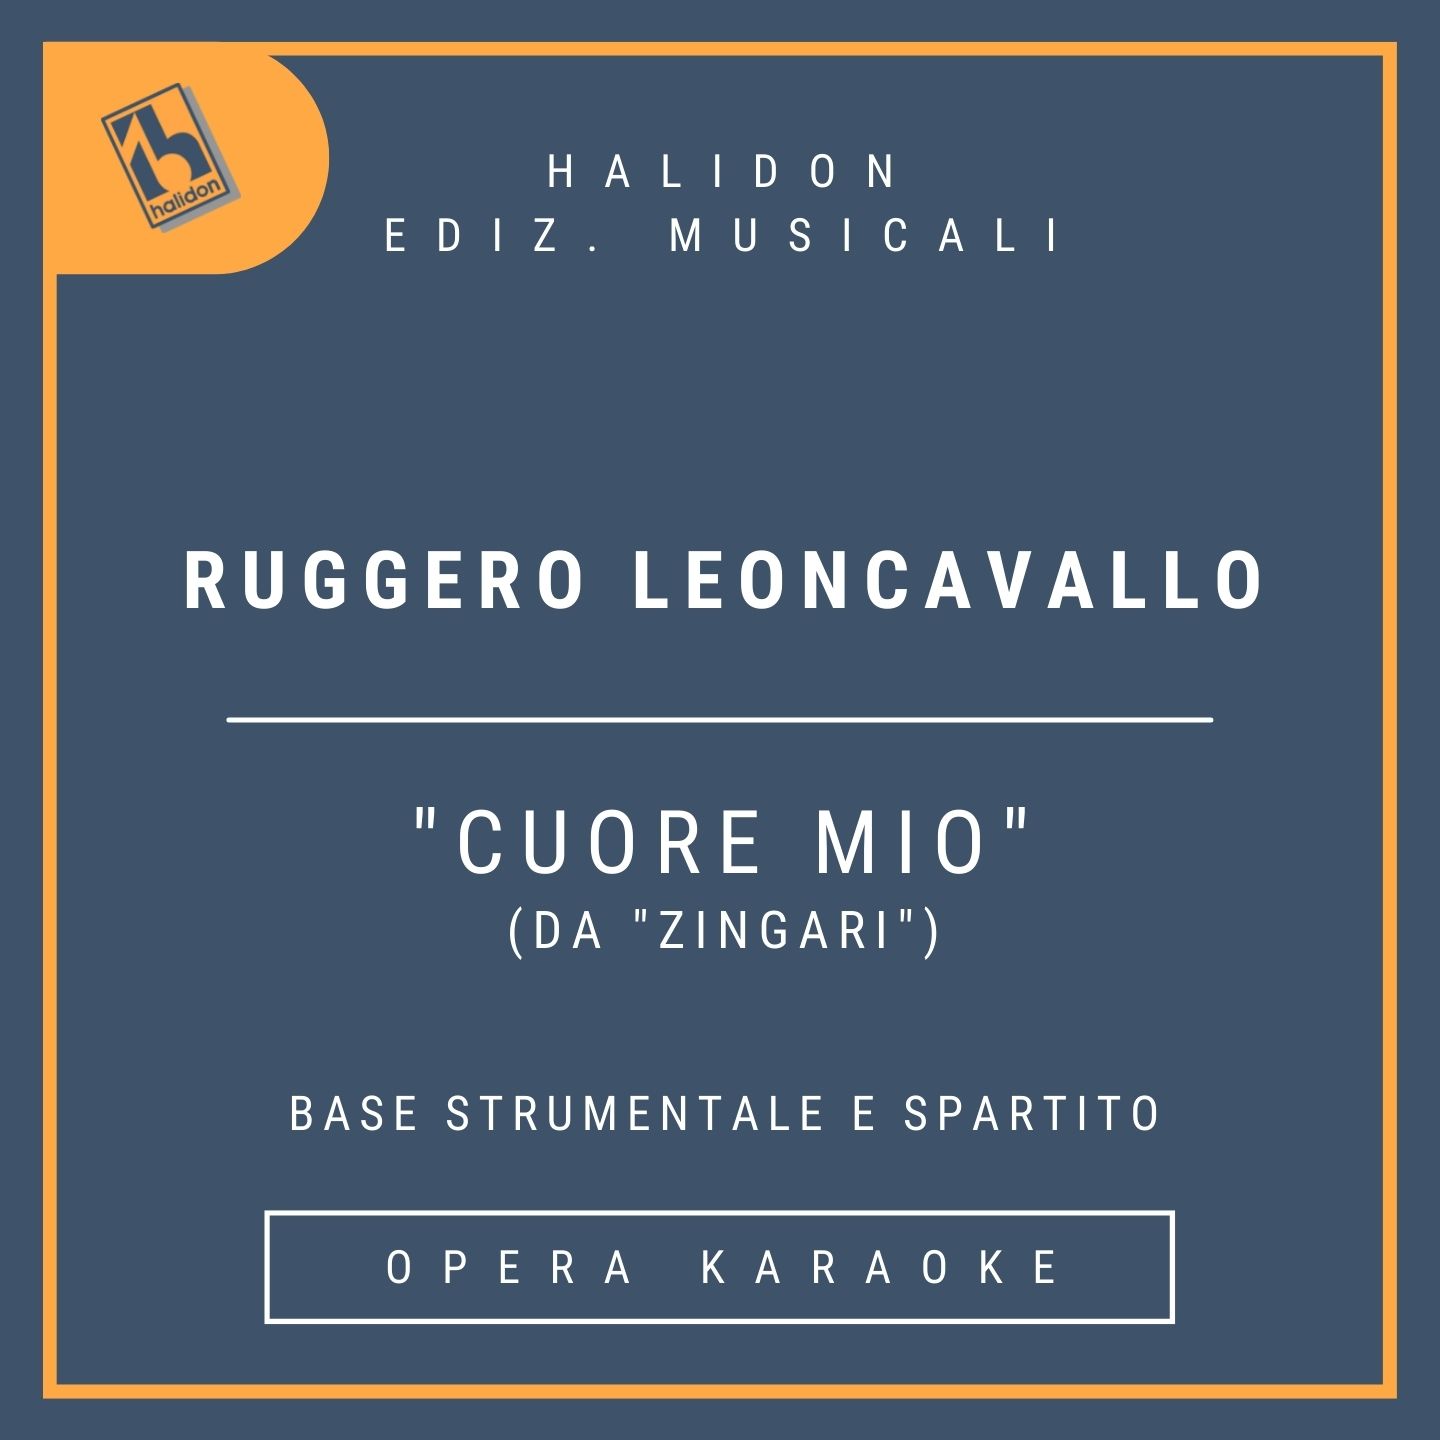 Ruggero Leoncavallo - Cuore mio (from 'Zingari') - Fleana's Aria (dramatic soprano) - Instrumental track + sheet